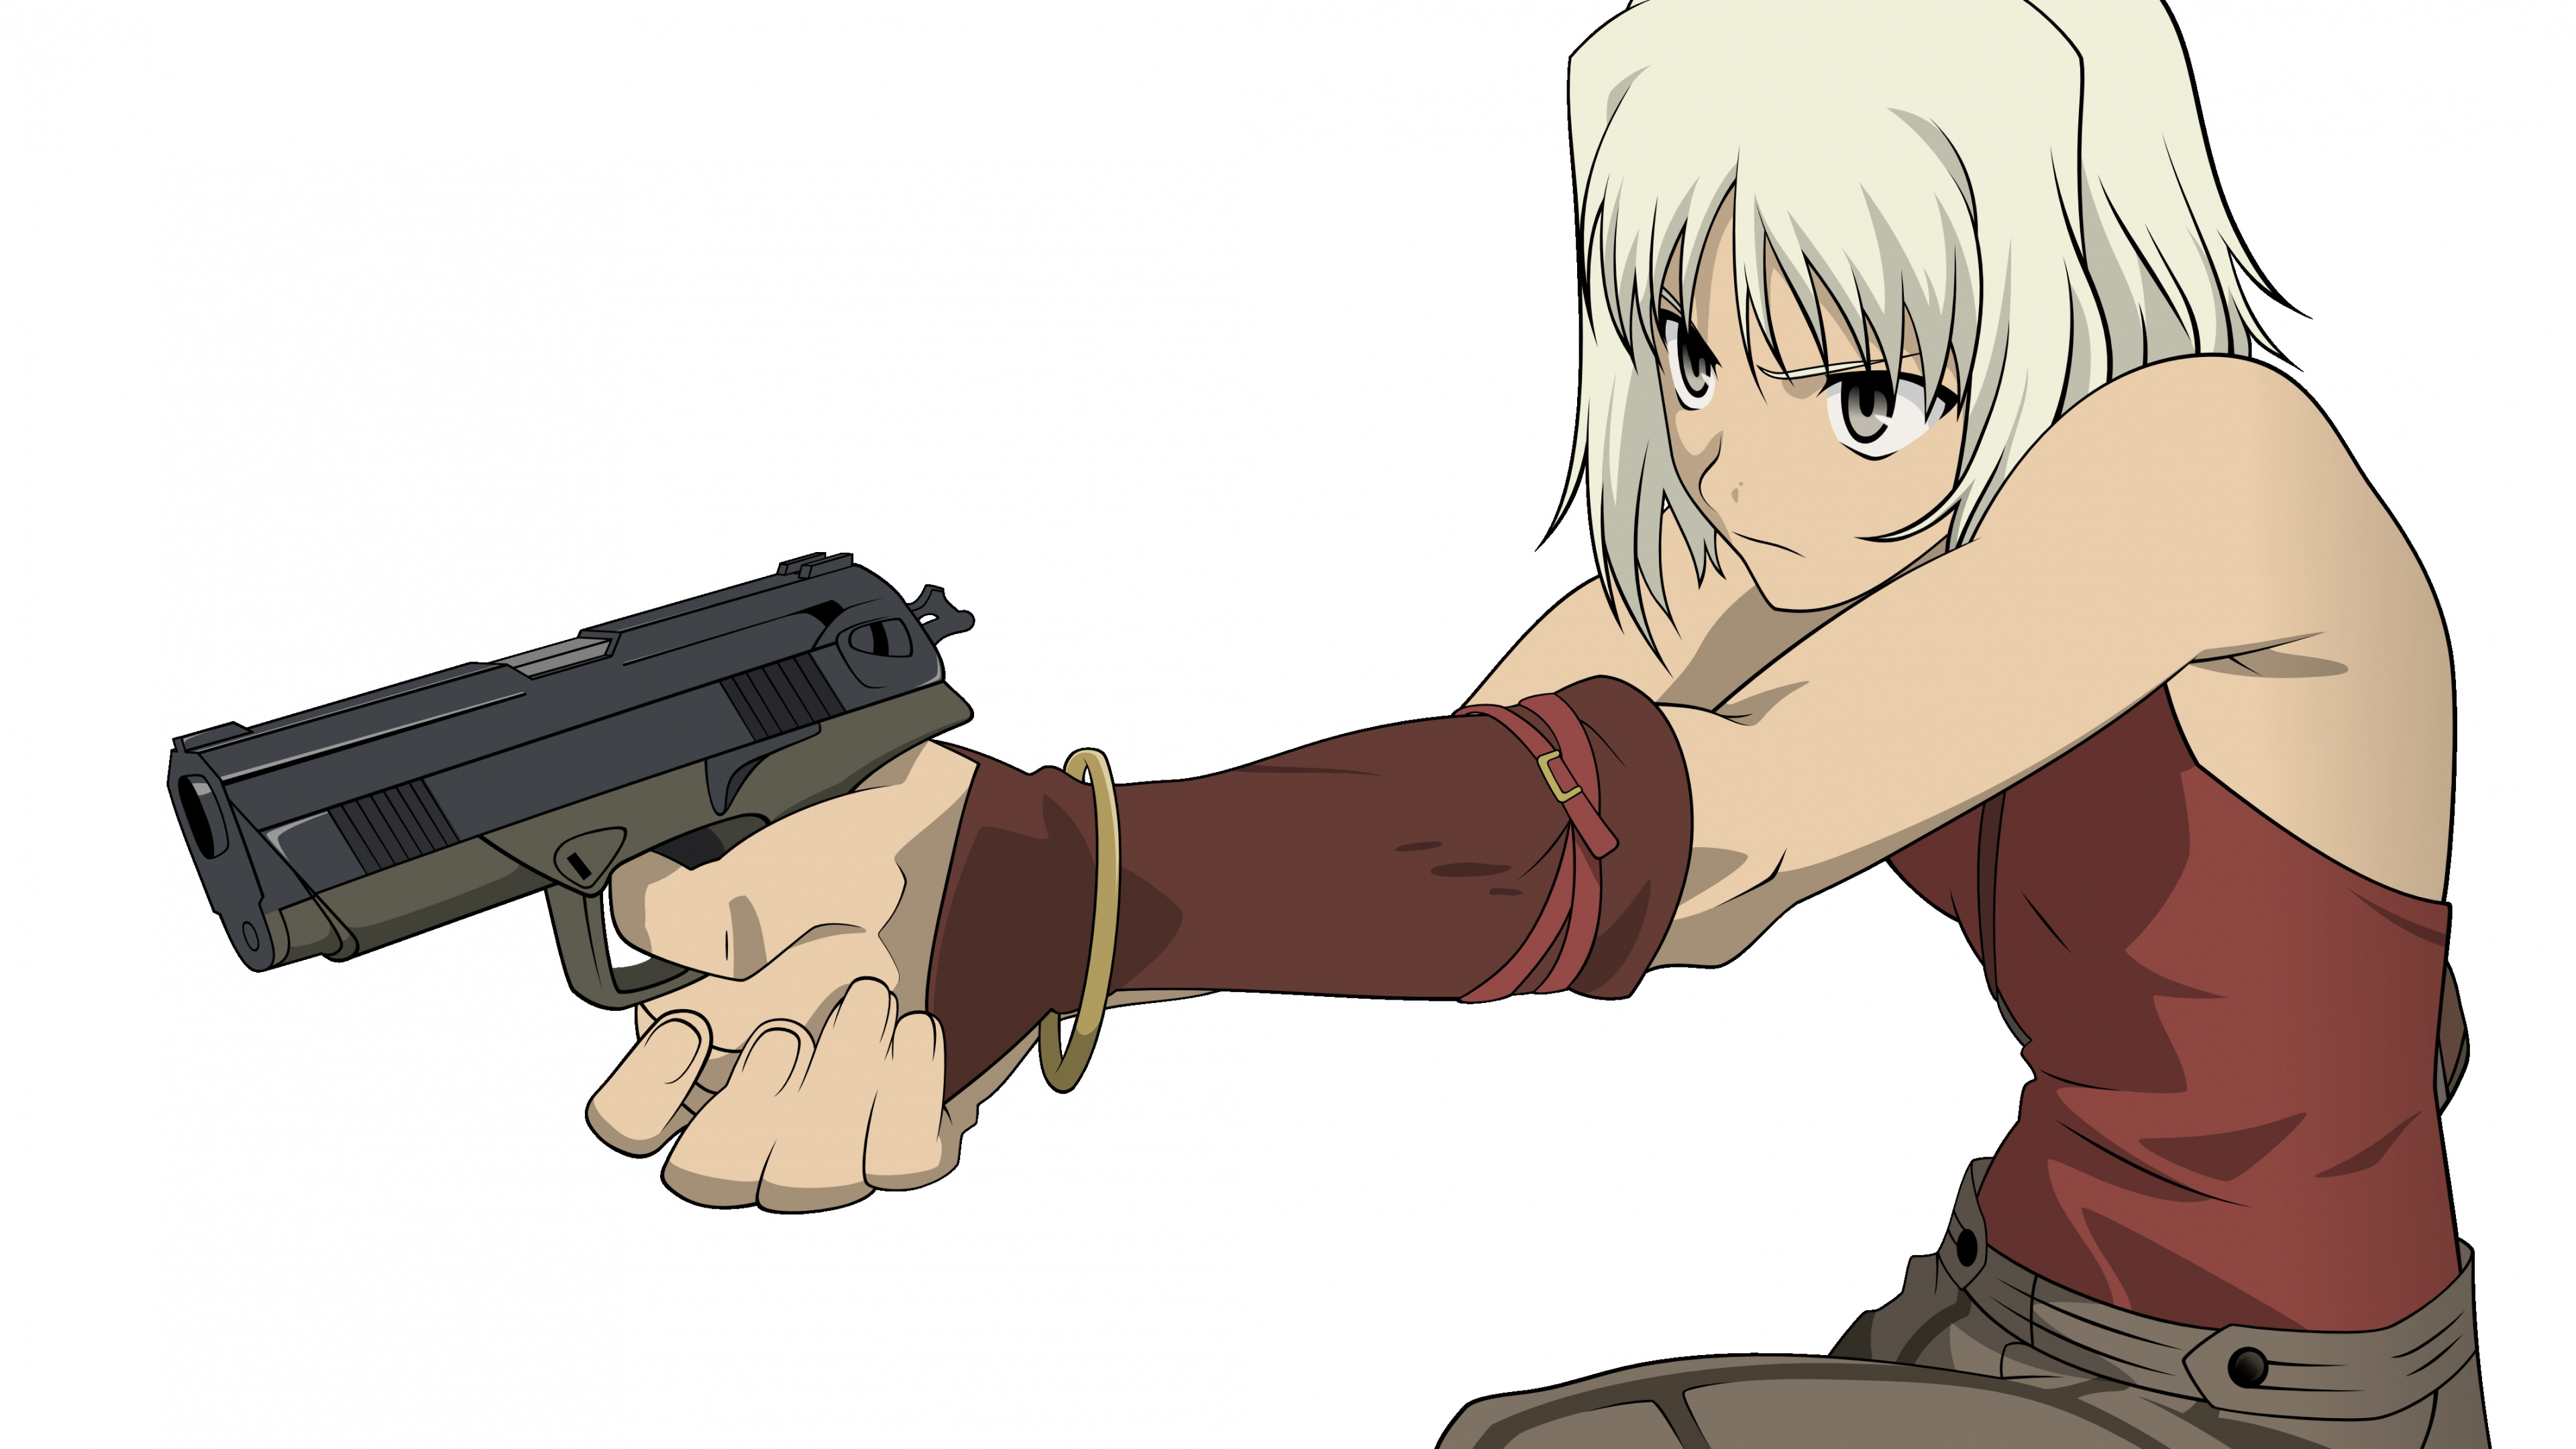 Personaje de Anime Masculino de Pelo Rubio Sosteniendo Una Pistola Semiautomática Negra. Wallpaper in 3840x2160 Resolution